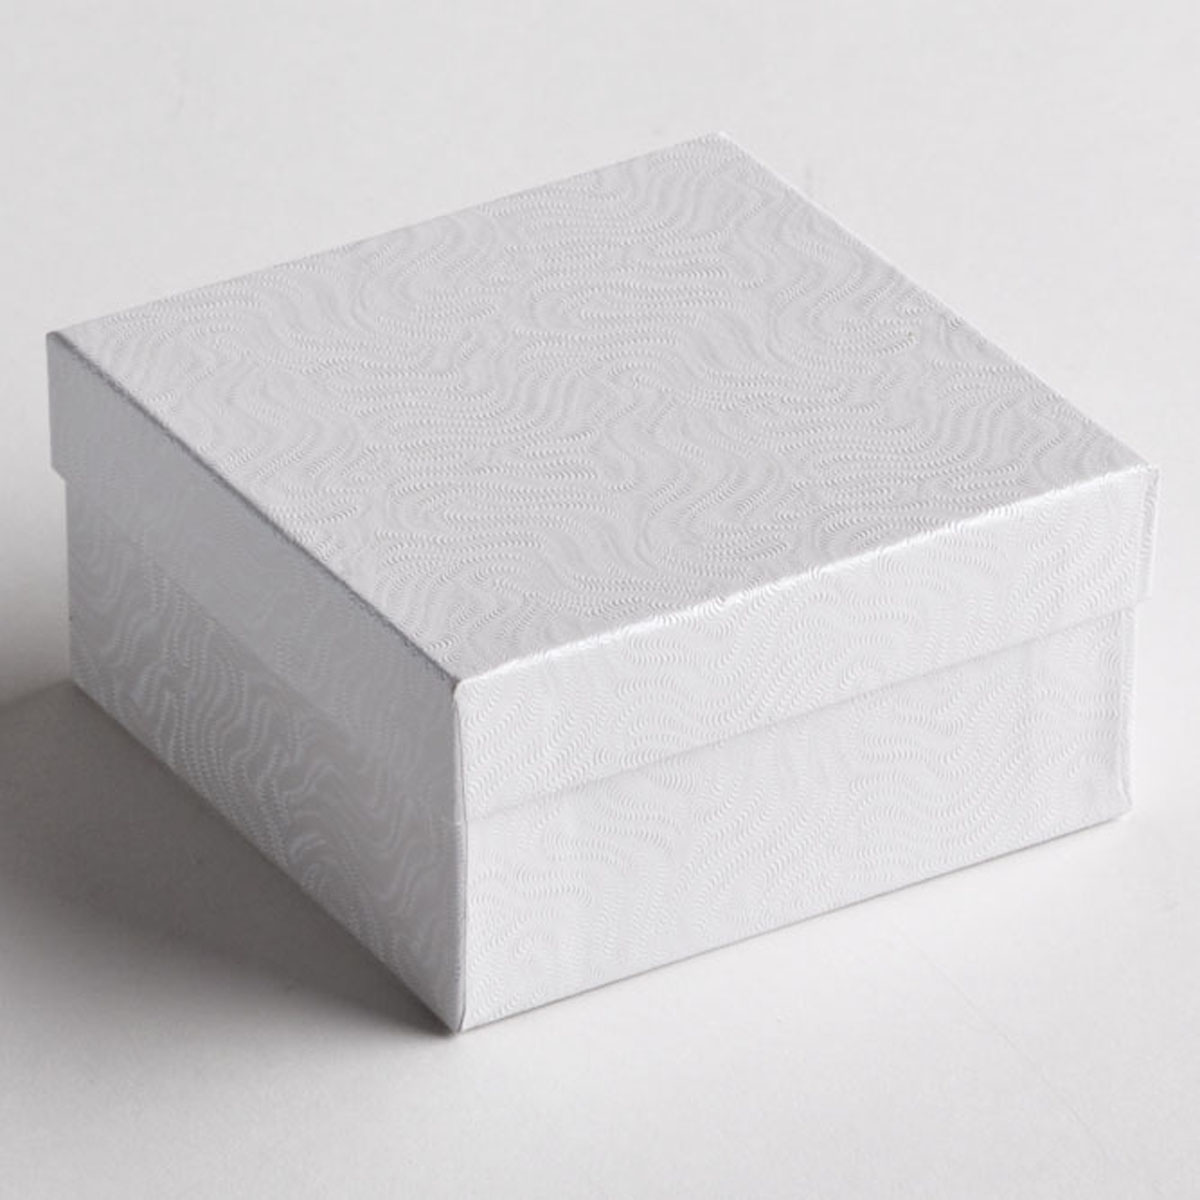 100 PC 8x2x7/8" White Swirl #82 Jewelry Box Gift Packing Favor Retail Display 